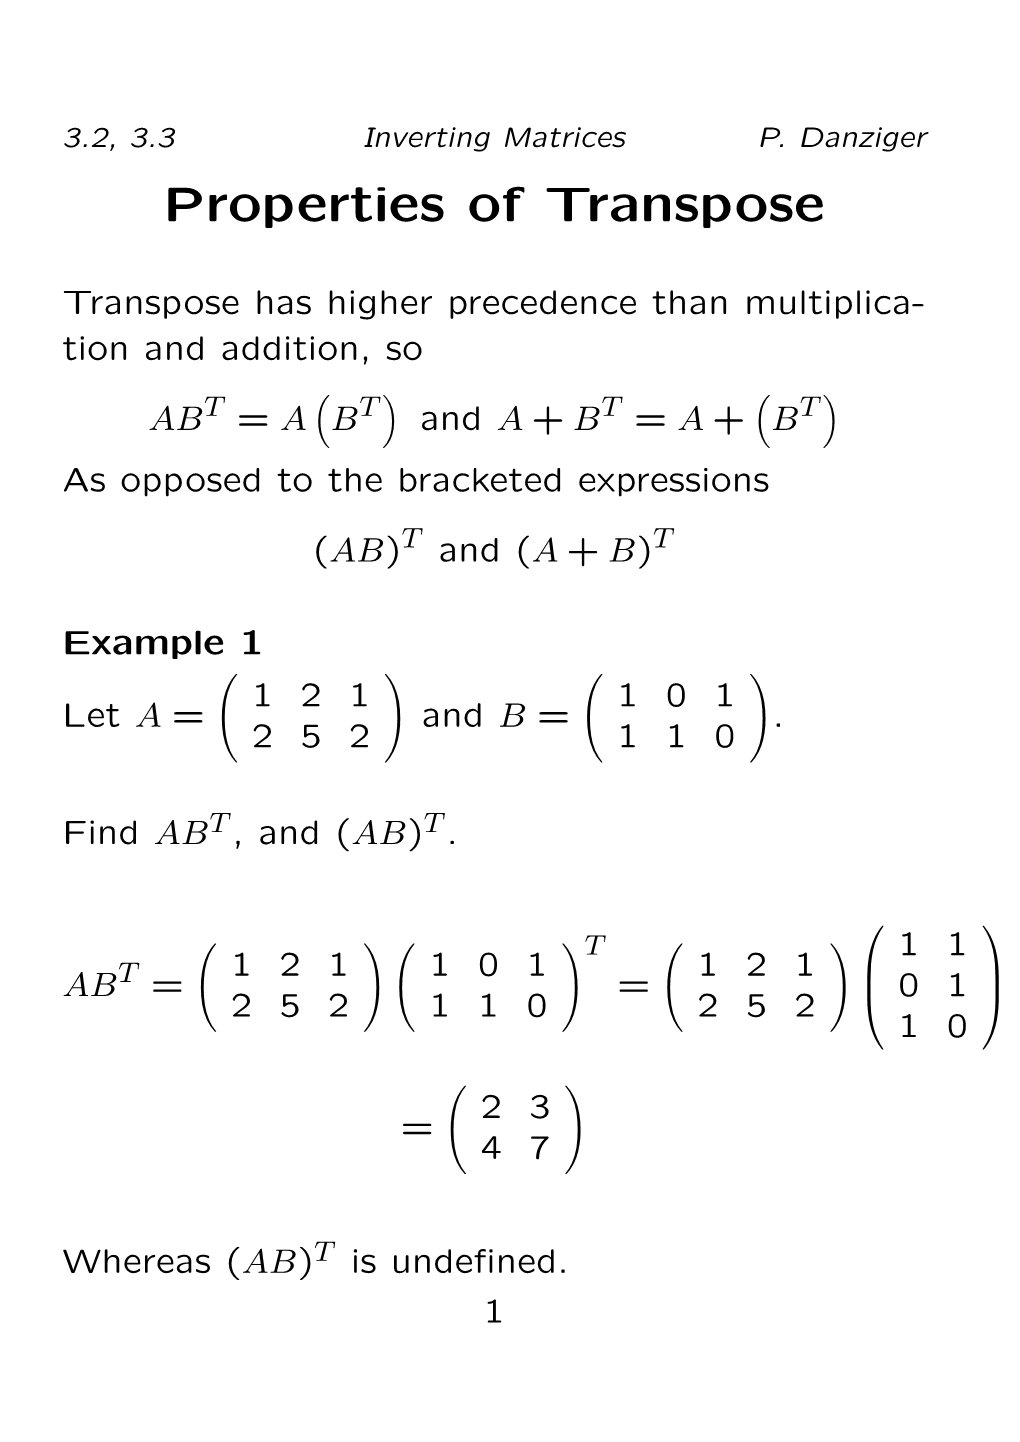 Properties of Transpose